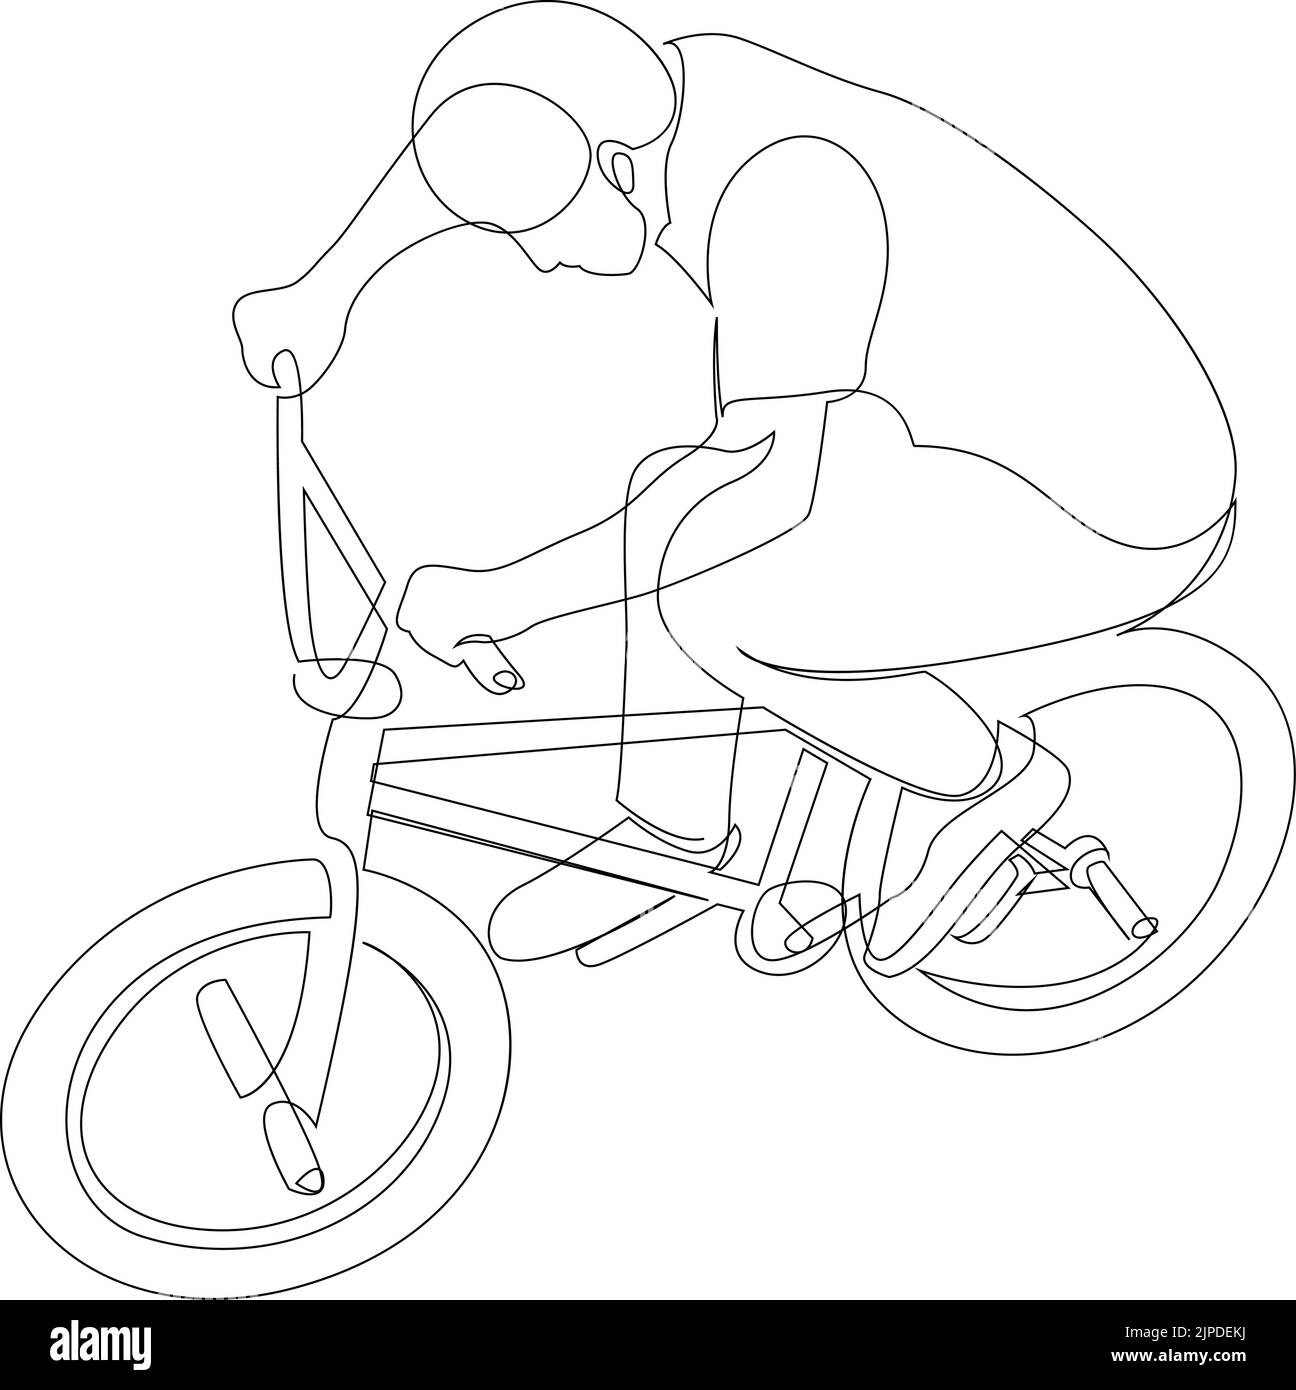 Bmx bike sketch Foto e Immagini Stock in Bianco e Nero - Alamy